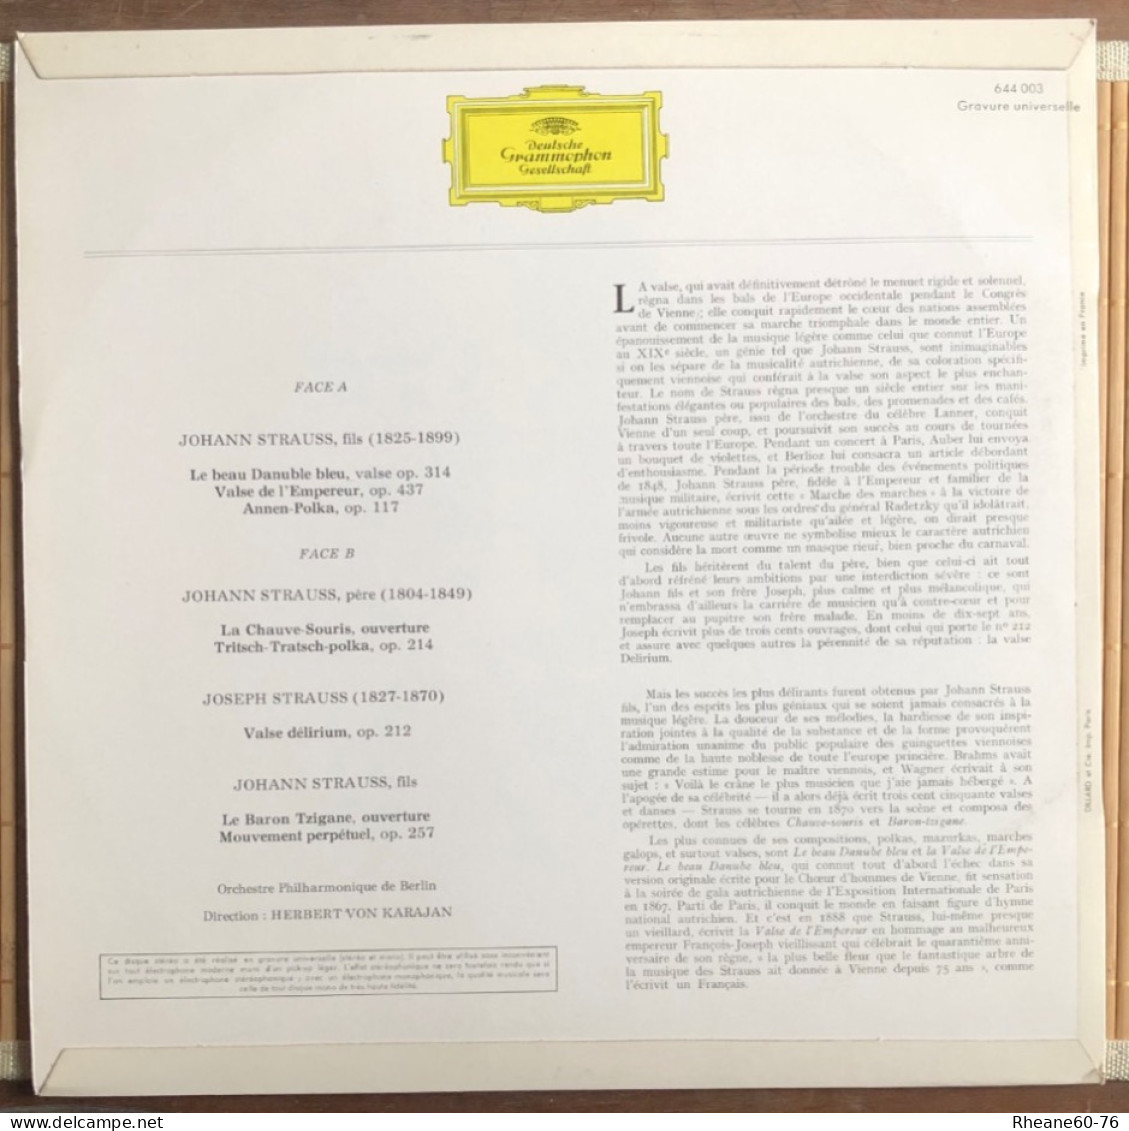 33T A Vienne Au Temps Des Strauss - Herbert Von Karajan Orchestre Philharmonique De Berlin - 644003 Deutsche Grammophon - Chants De Noel